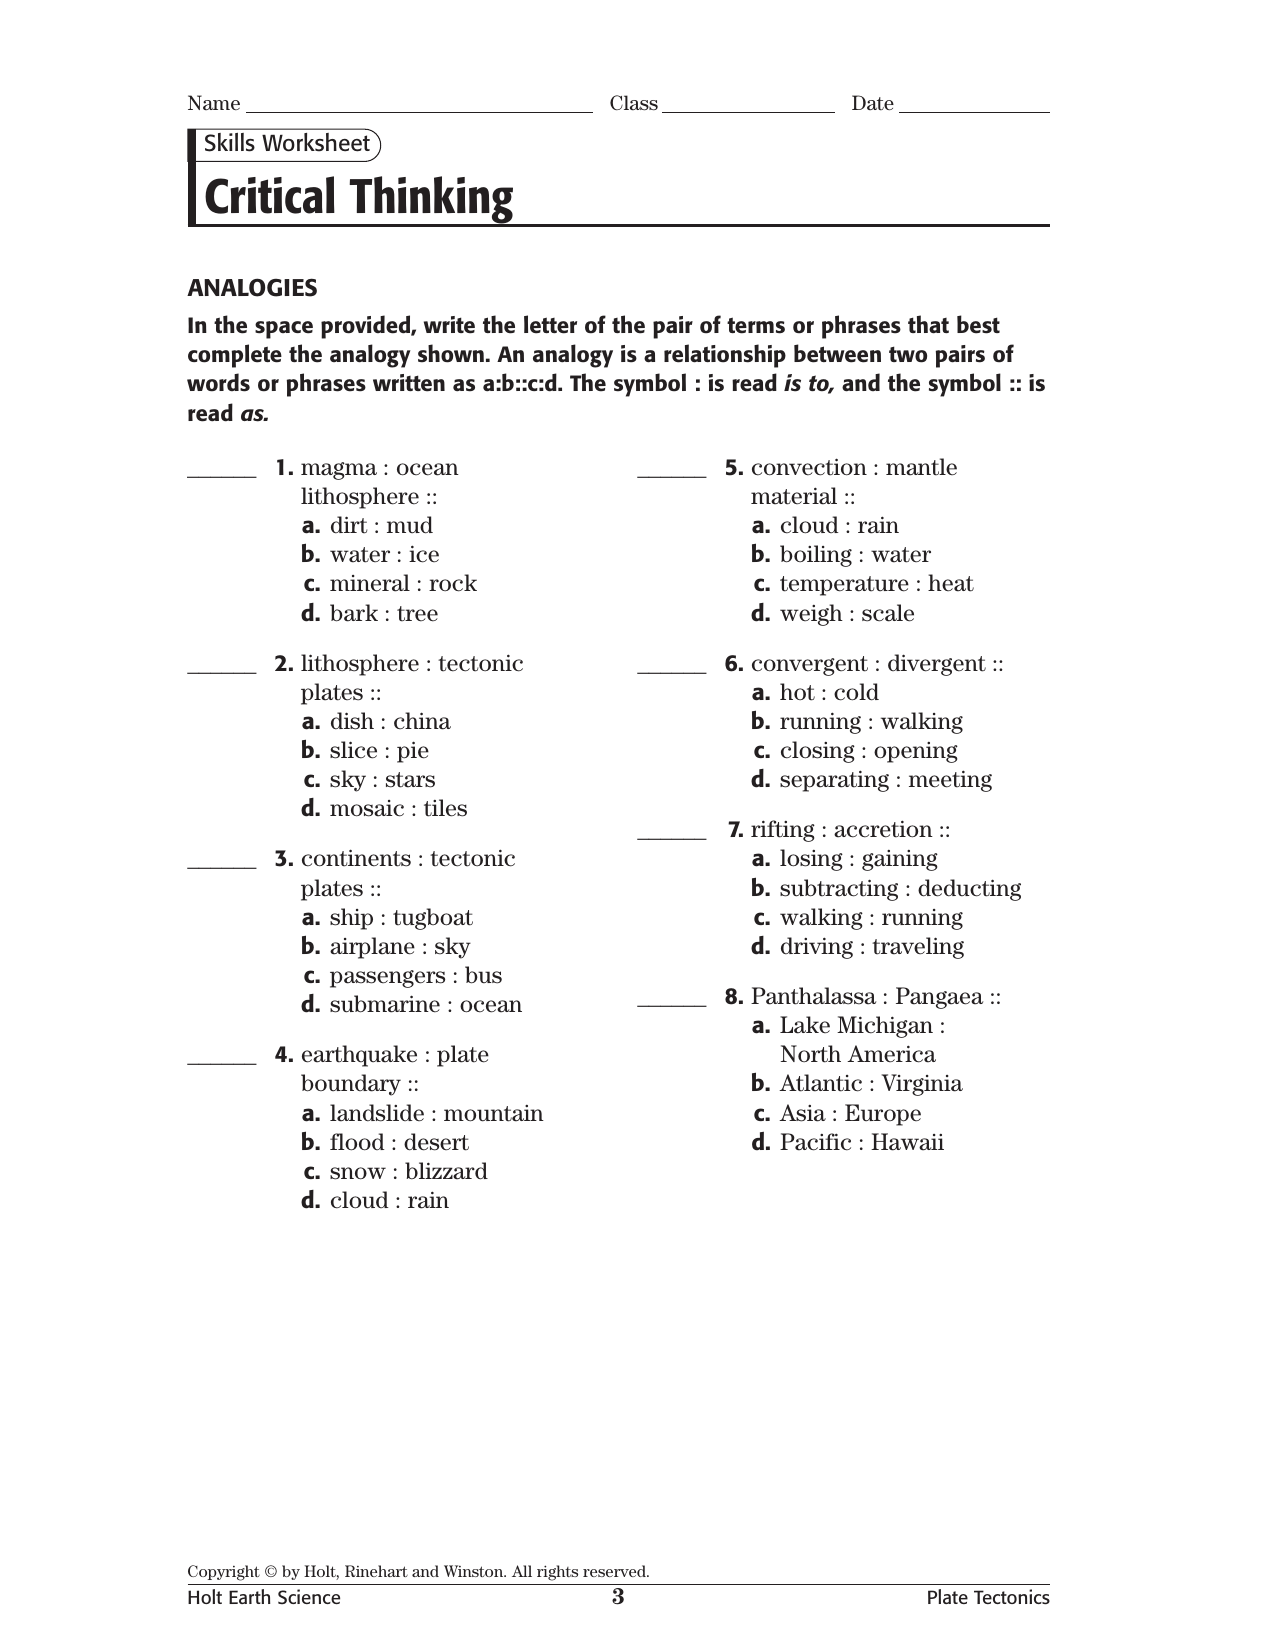 Critical Thinking - Leon County Schools Inside Skills Worksheet Critical Thinking Analogies